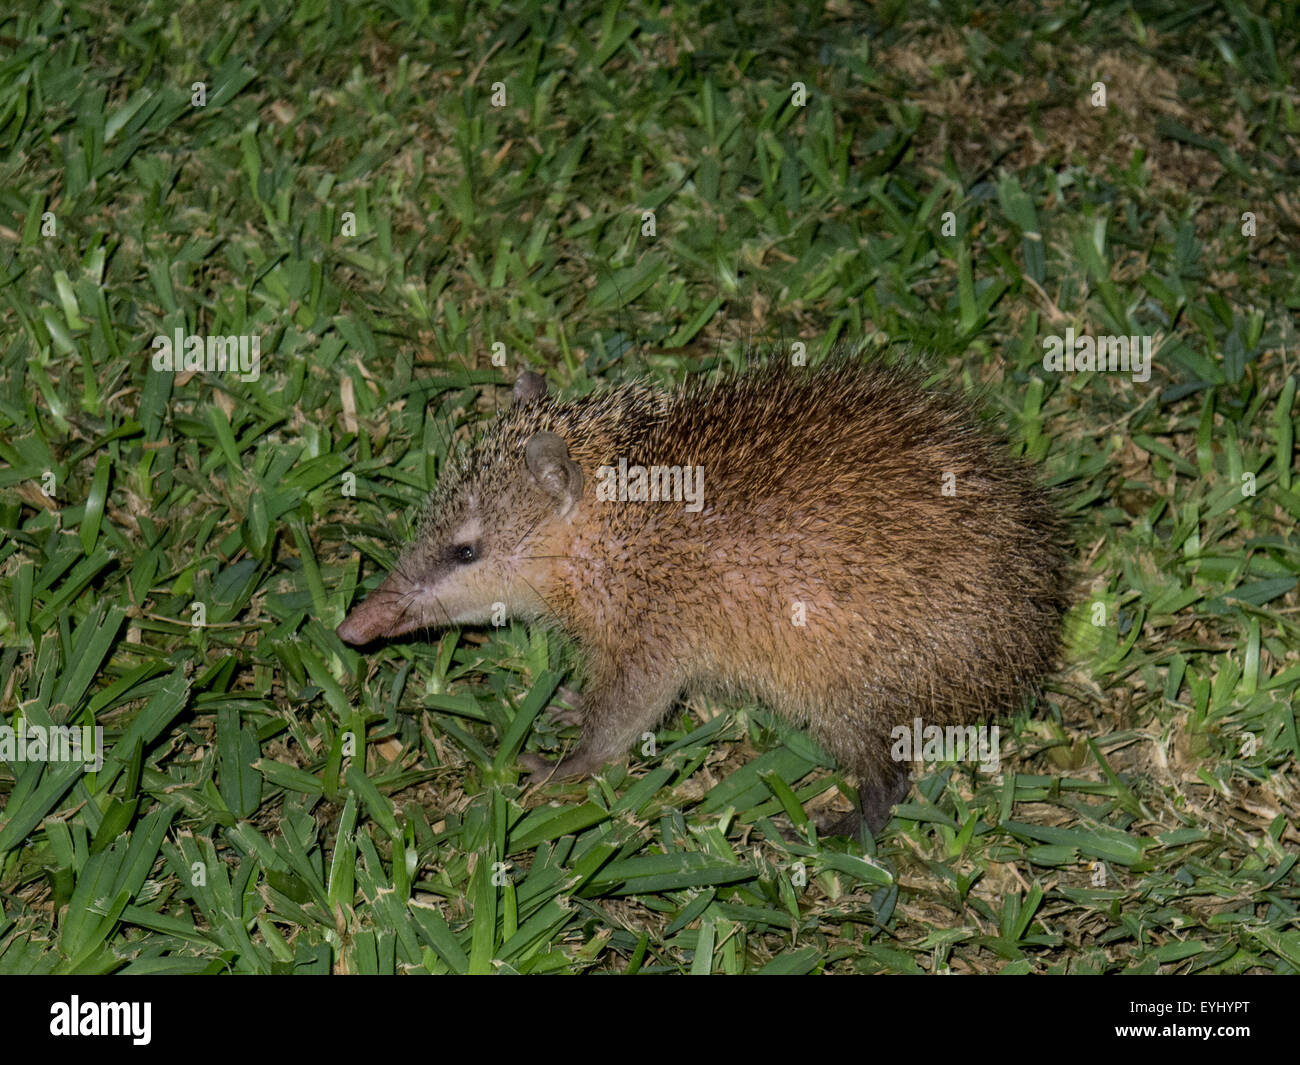 Fauna of mauritius hi-res stock photography and images - Alamy